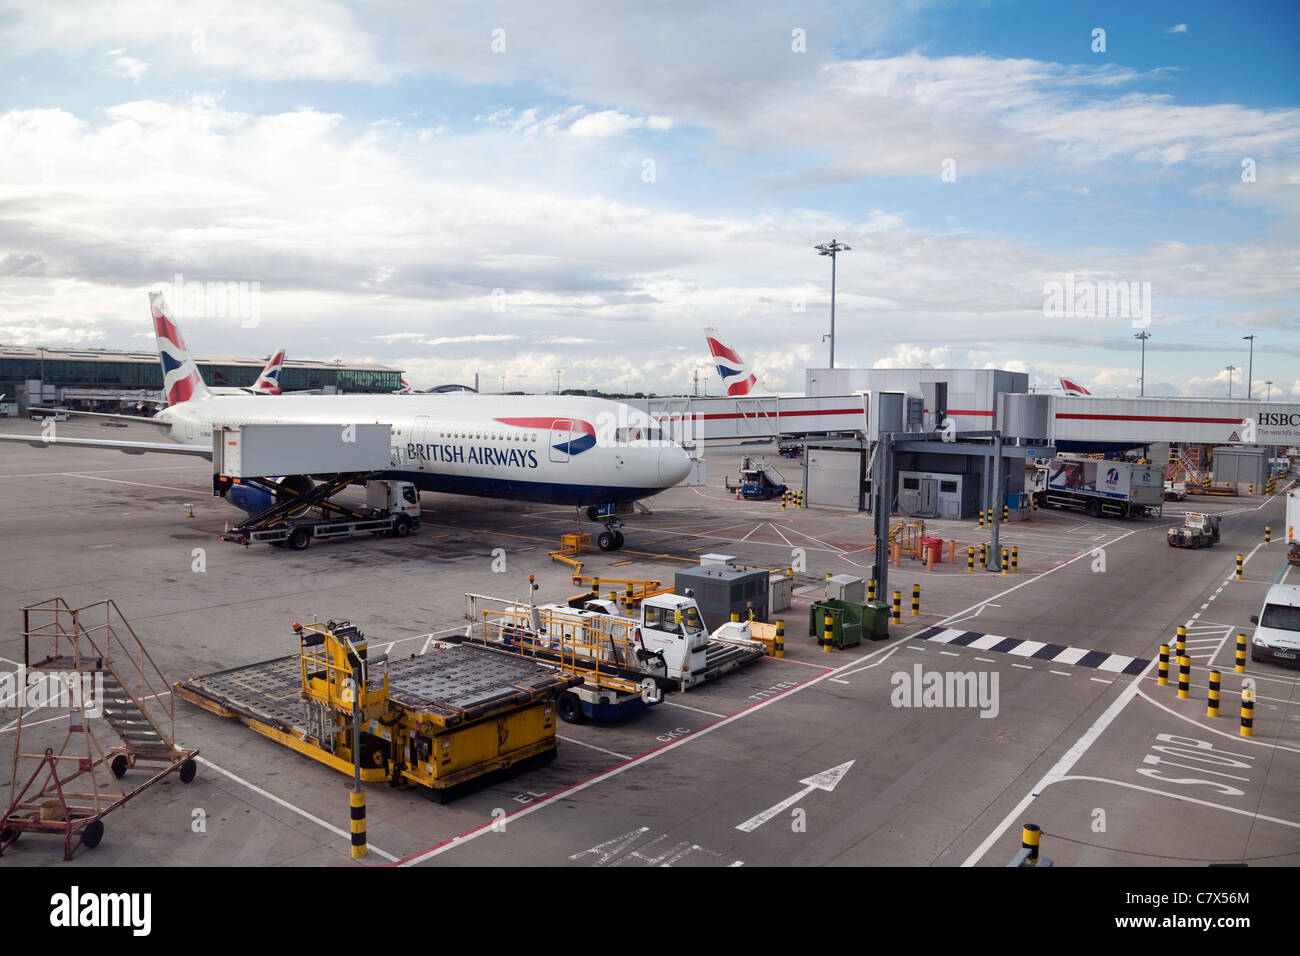 British airways plane loading luggage on the tarmac, Terminal 5, Heathrow airport London UK Stock Photo